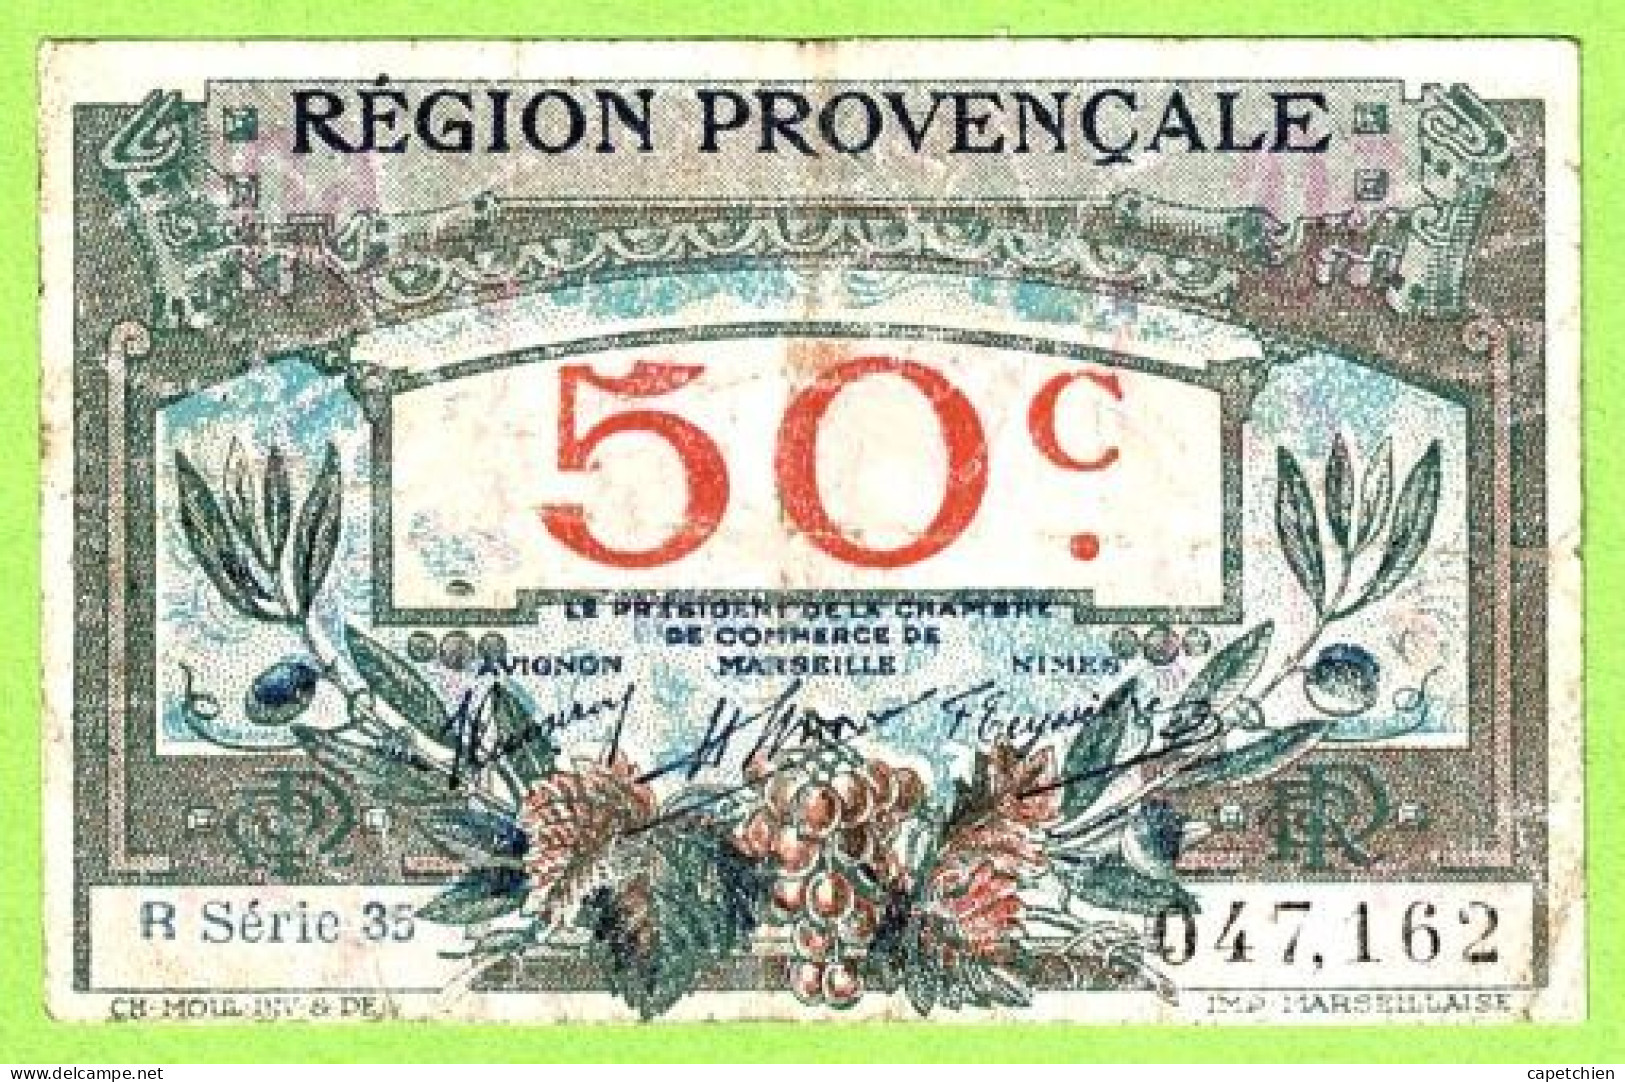 FRANCE / CHAMBRE De COMMERCE / REGION PROVENCALE / 50 CENTIMES / 047162 / R  SERIE 35 - Handelskammer